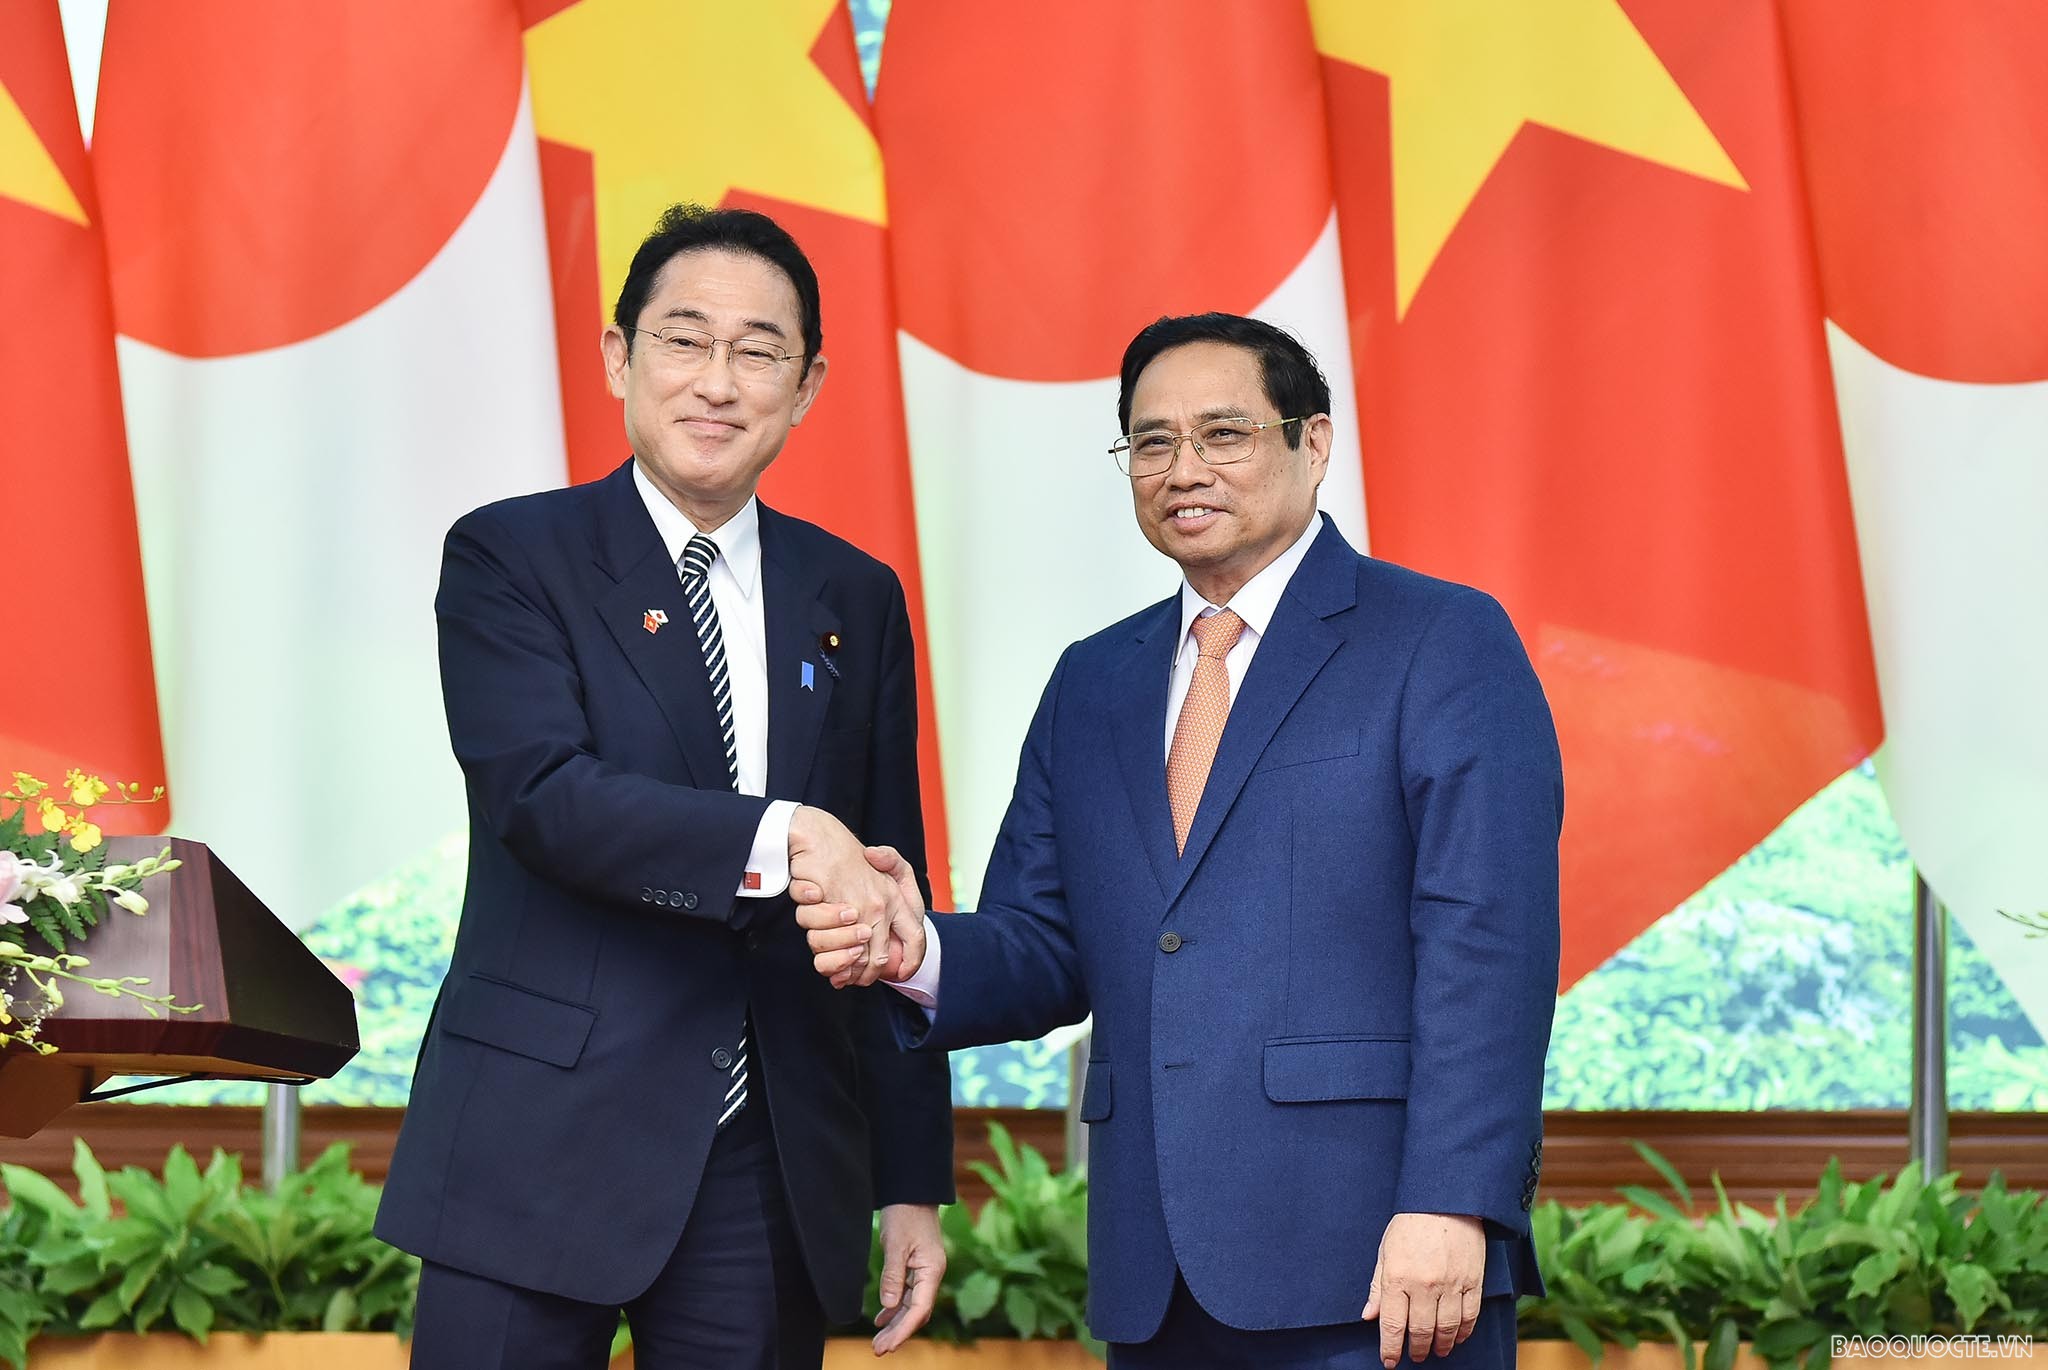 Prime Minister Pham Minh Chinh and Japanese Prime Minister Kishida Fumio hold talks